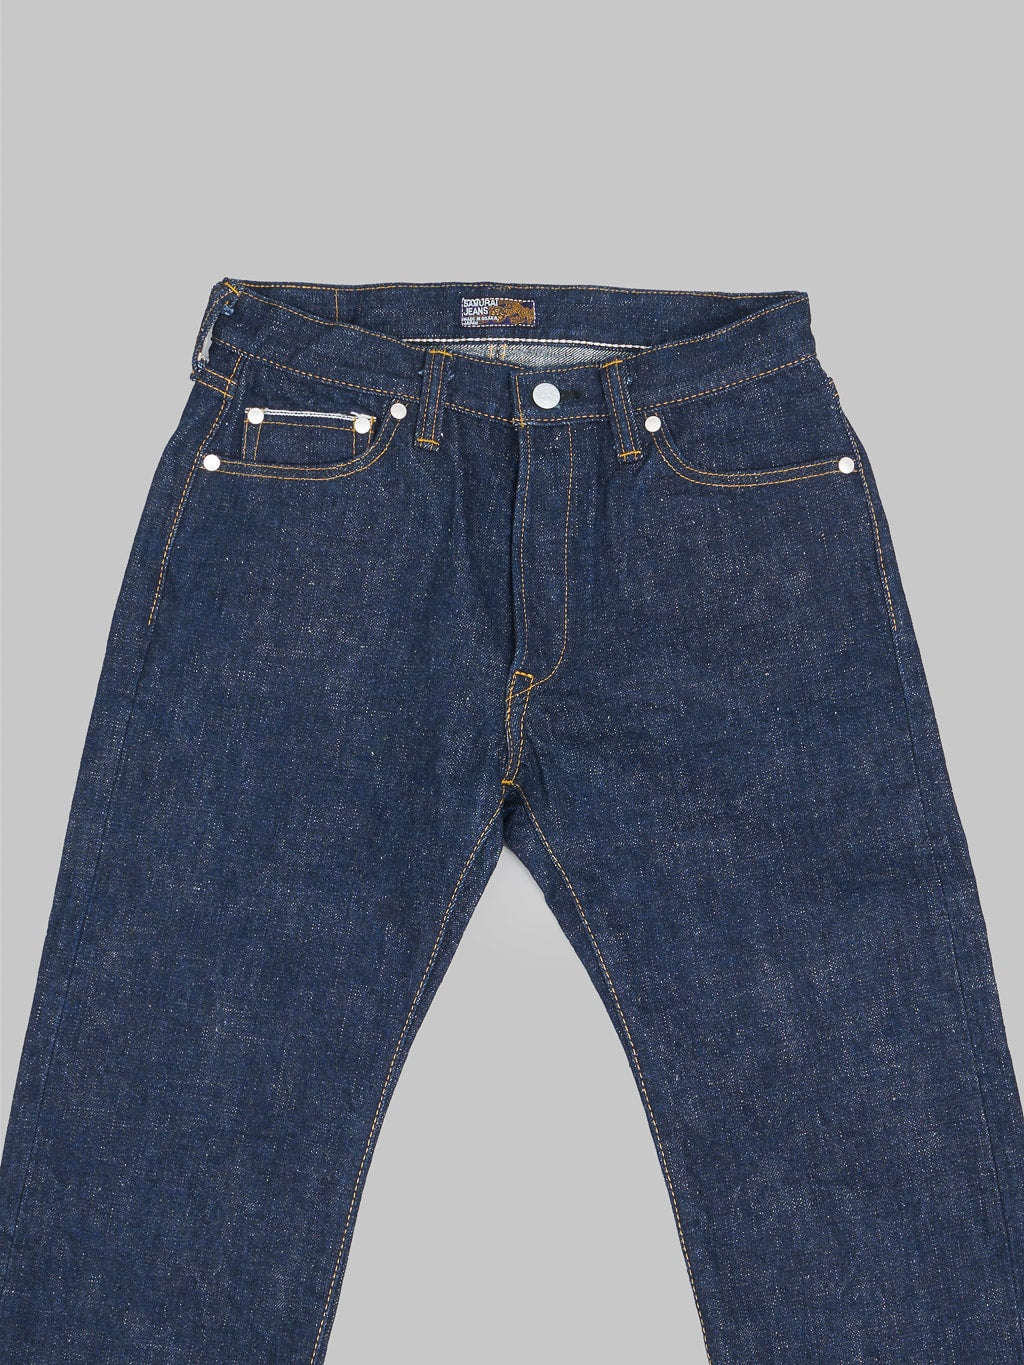 Samurai Jeans S000JP-AX "Ai Plus x Yamato Model" 18oz Slim Straight Jeans